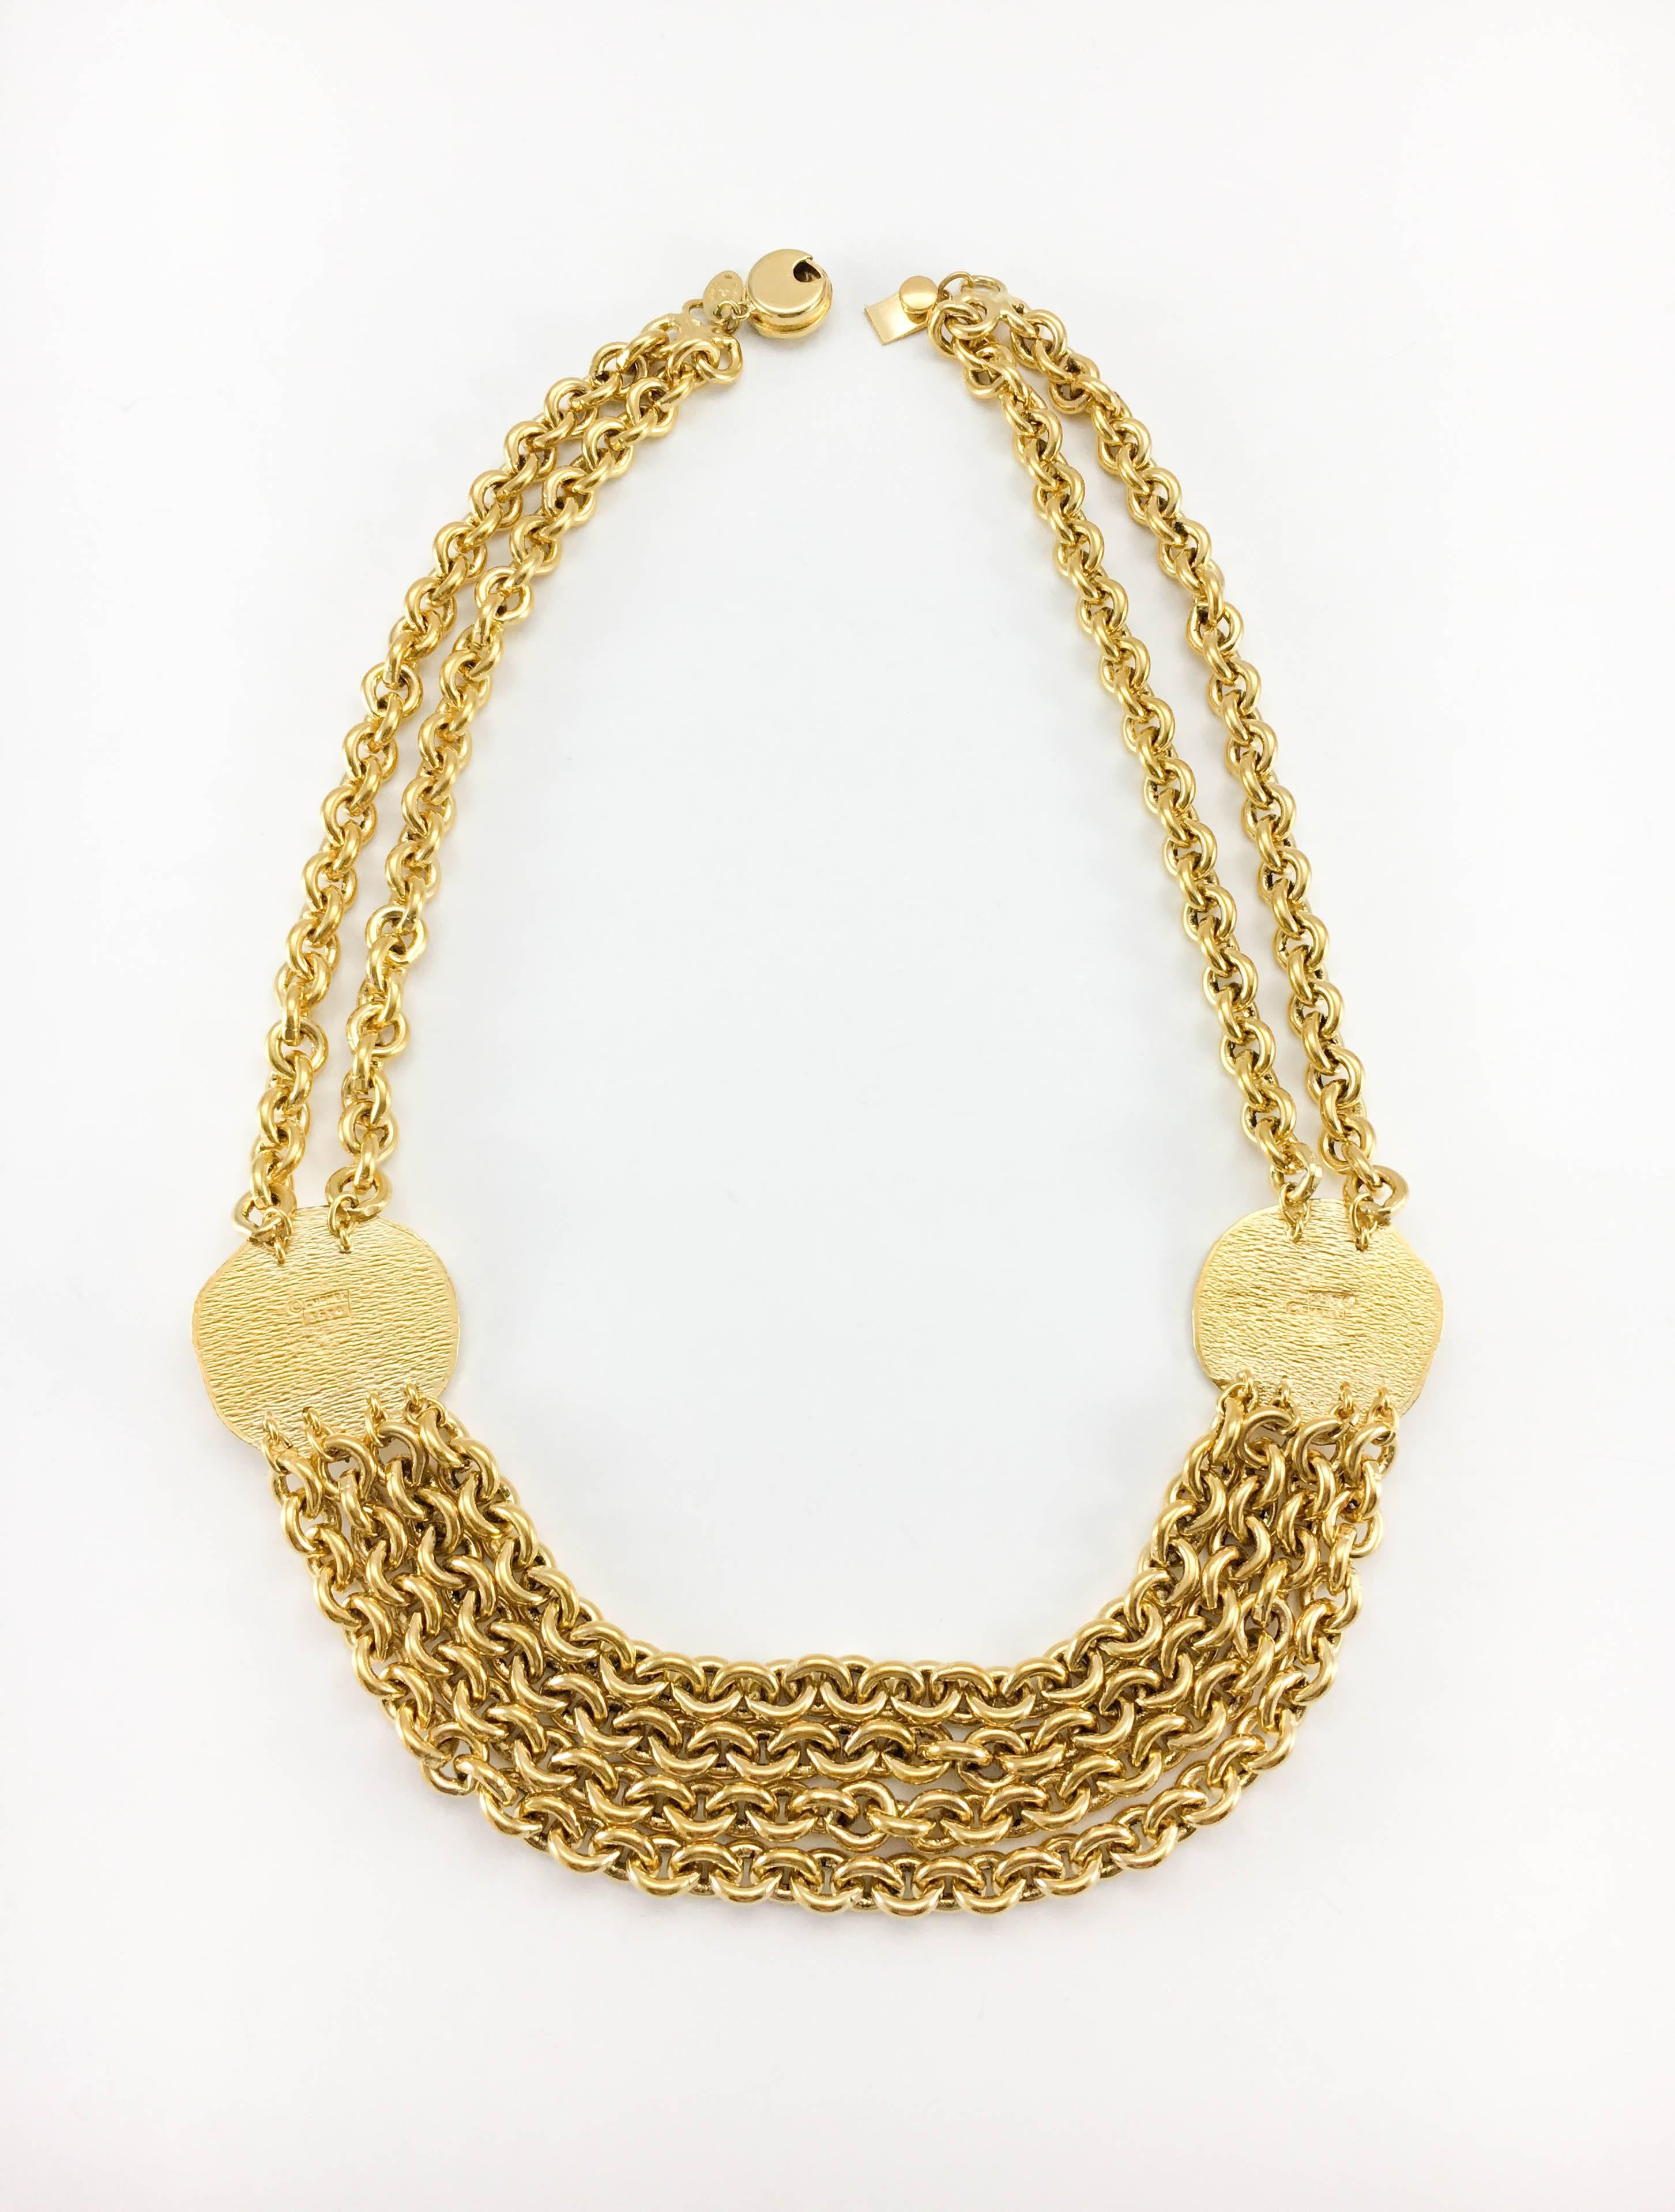 1984 Chanel Centaur Medallion Chain Necklace For Sale 1